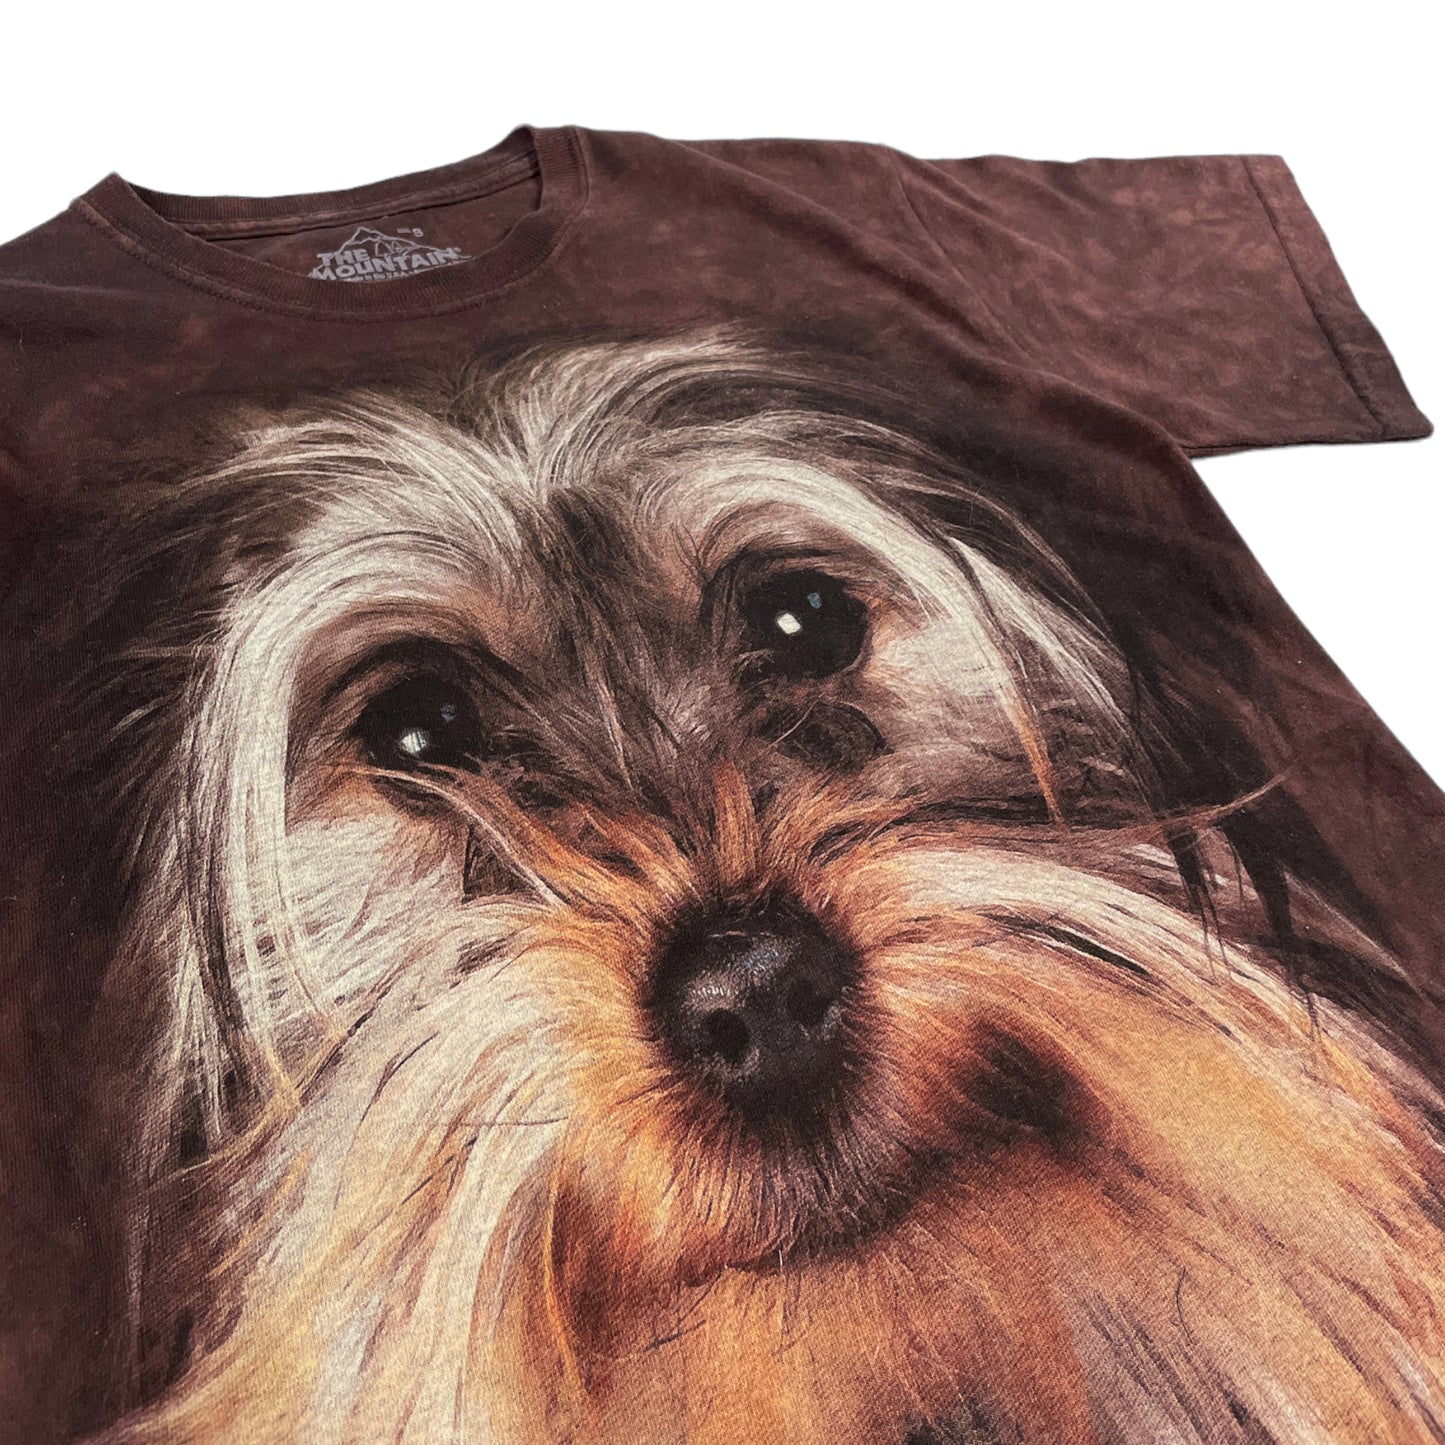 The Mountain Dog T-Shirt